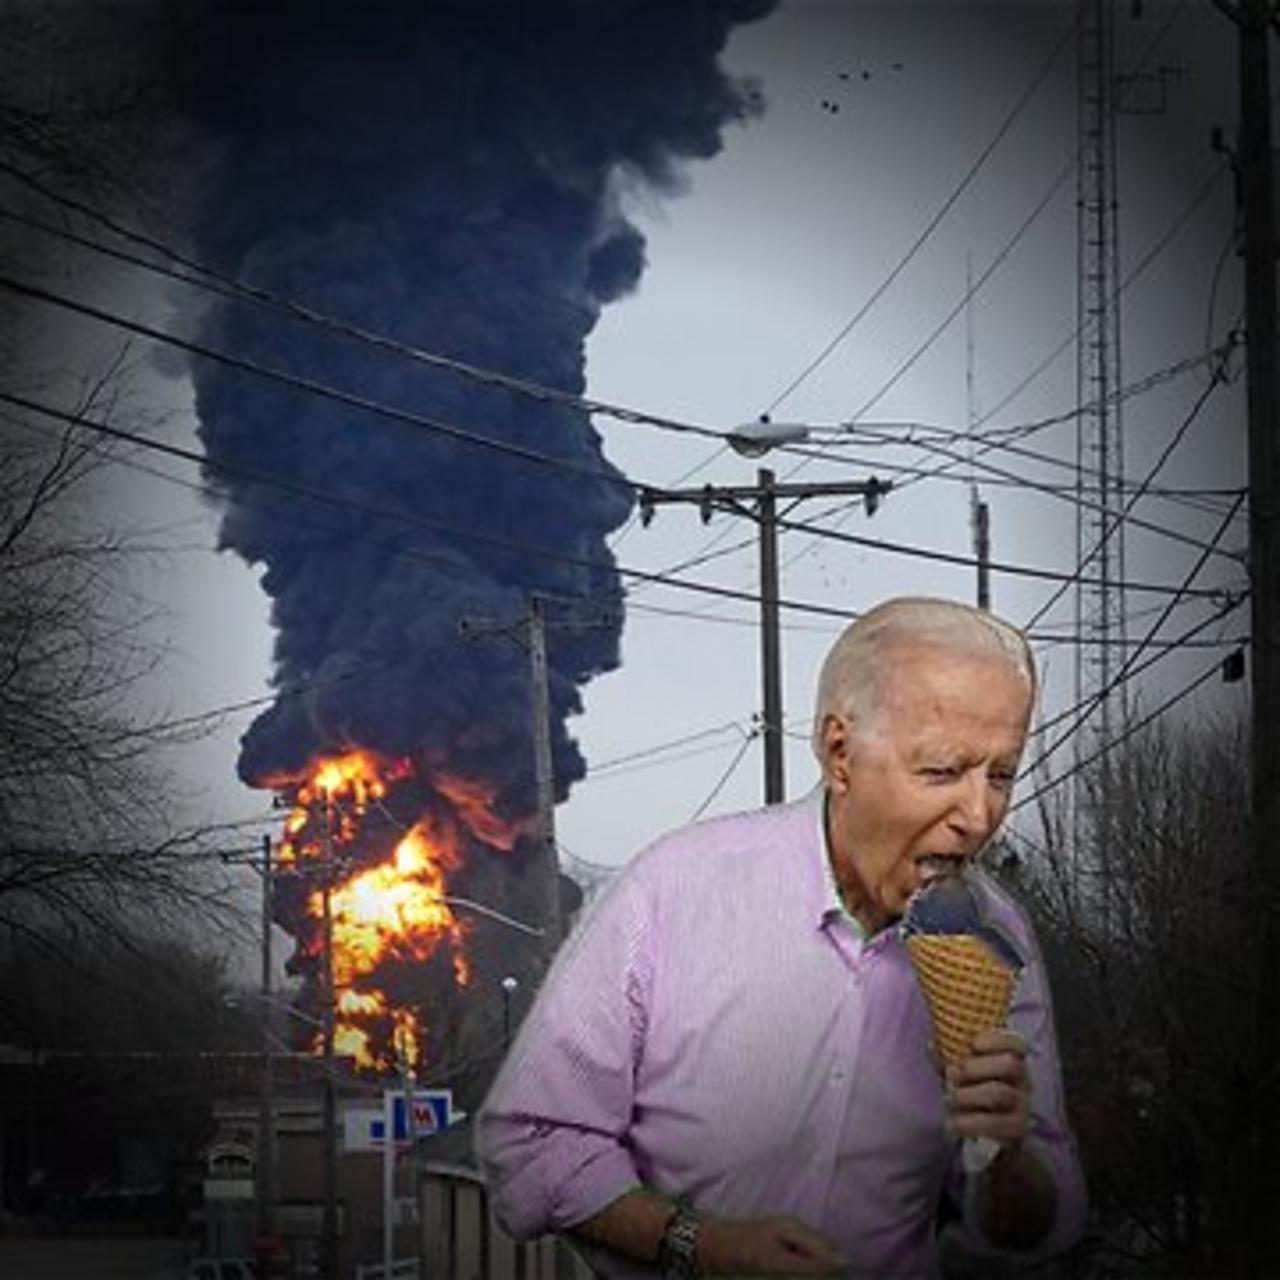 With Joe Biden...Great Emergency Management!